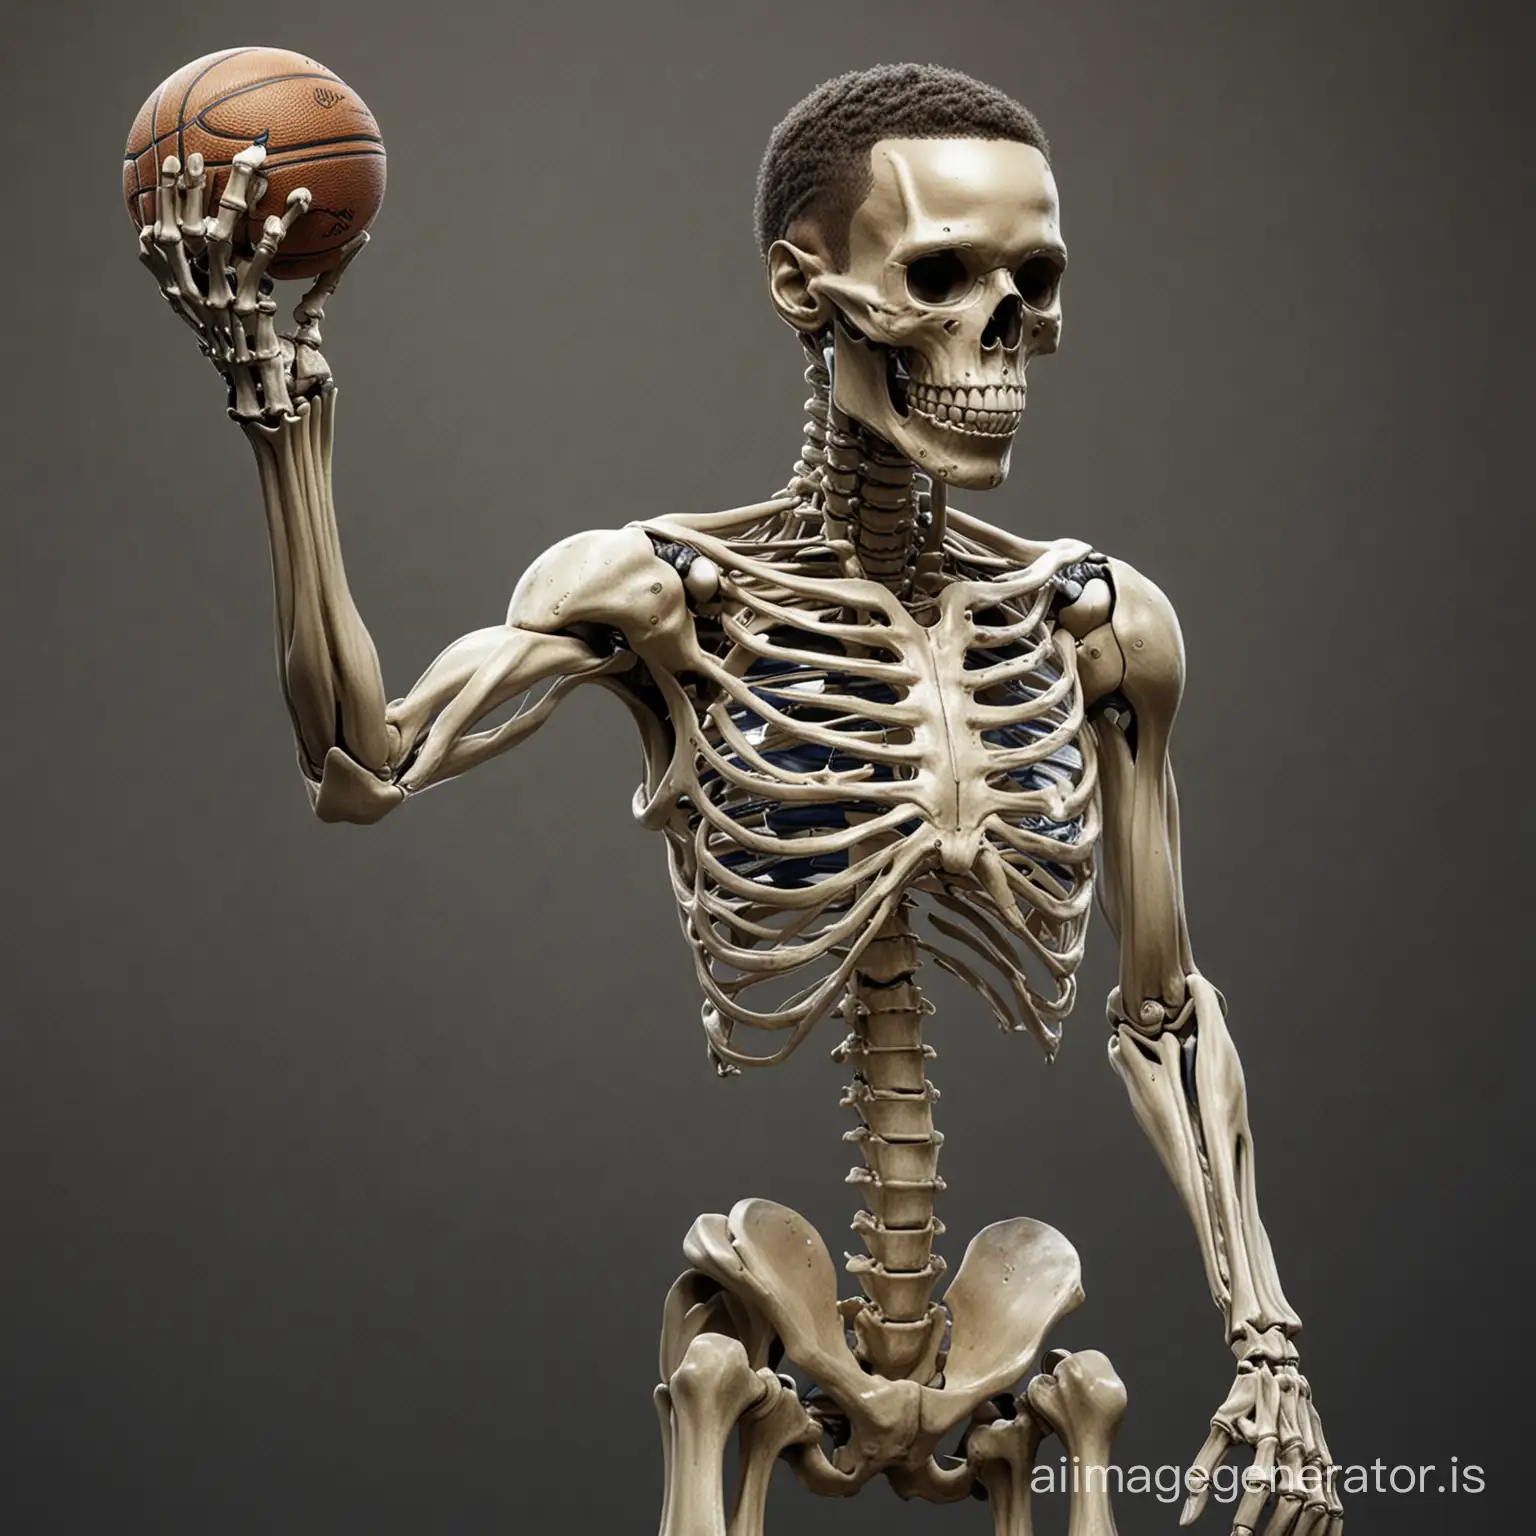 Stephen curry 
skeleton